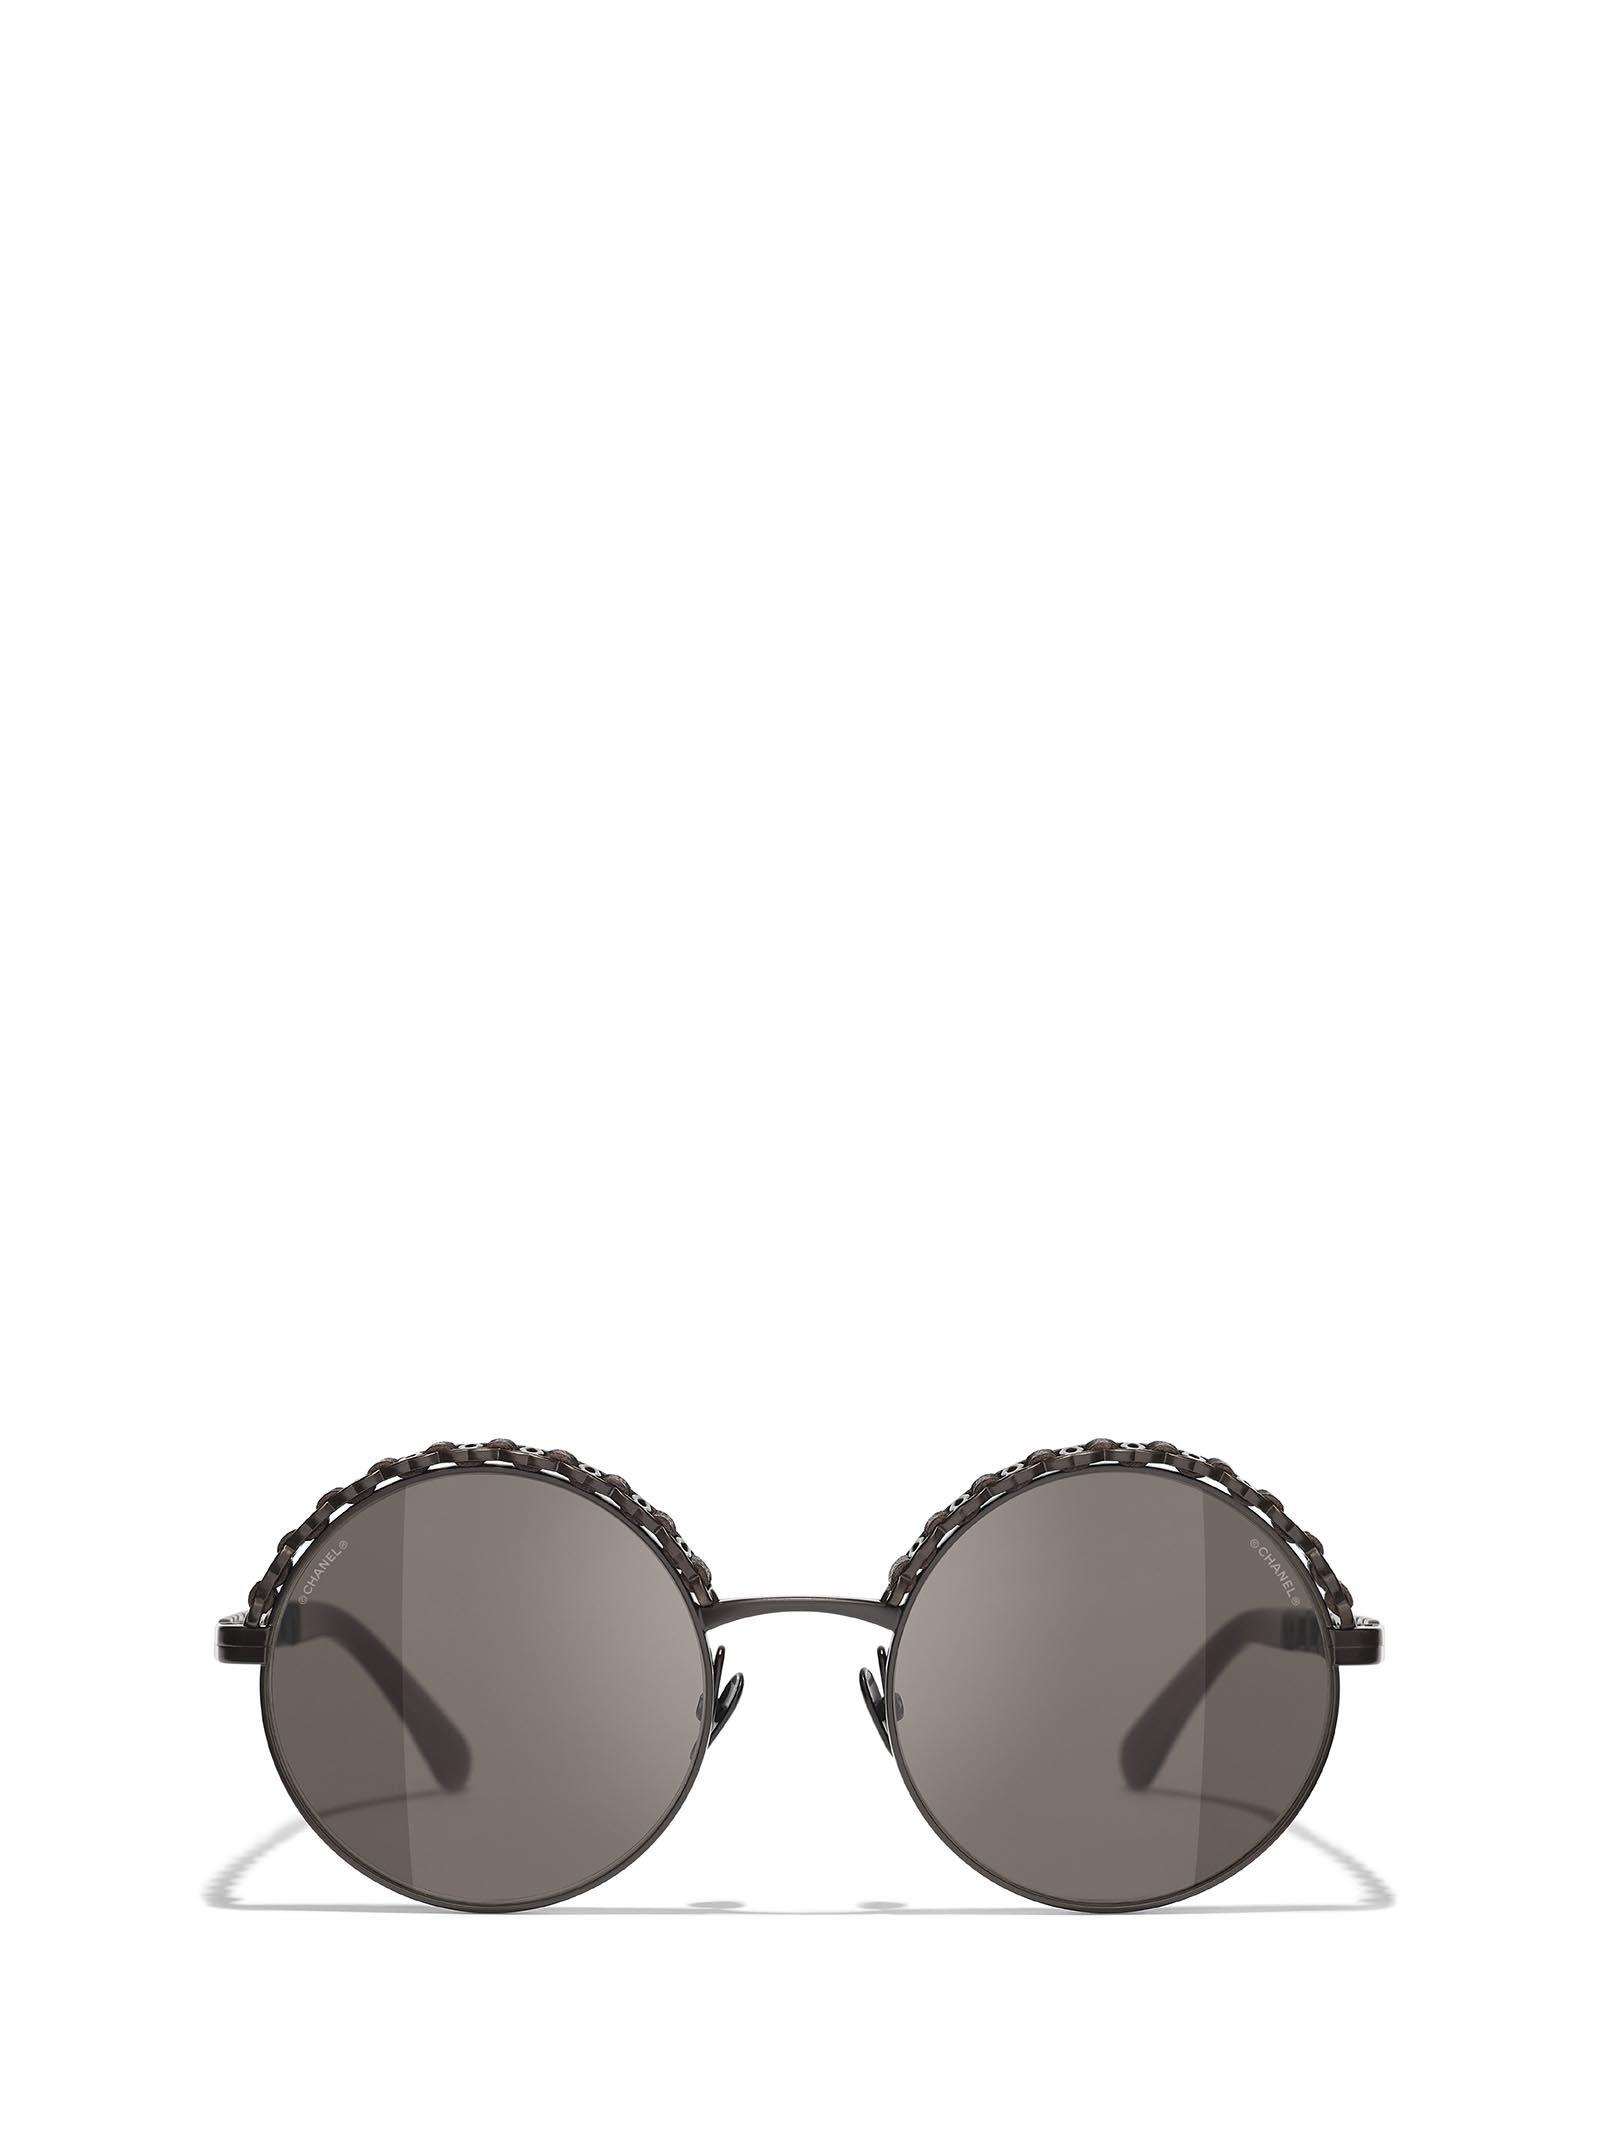 Chanel Sunglasses in Black | Lyst